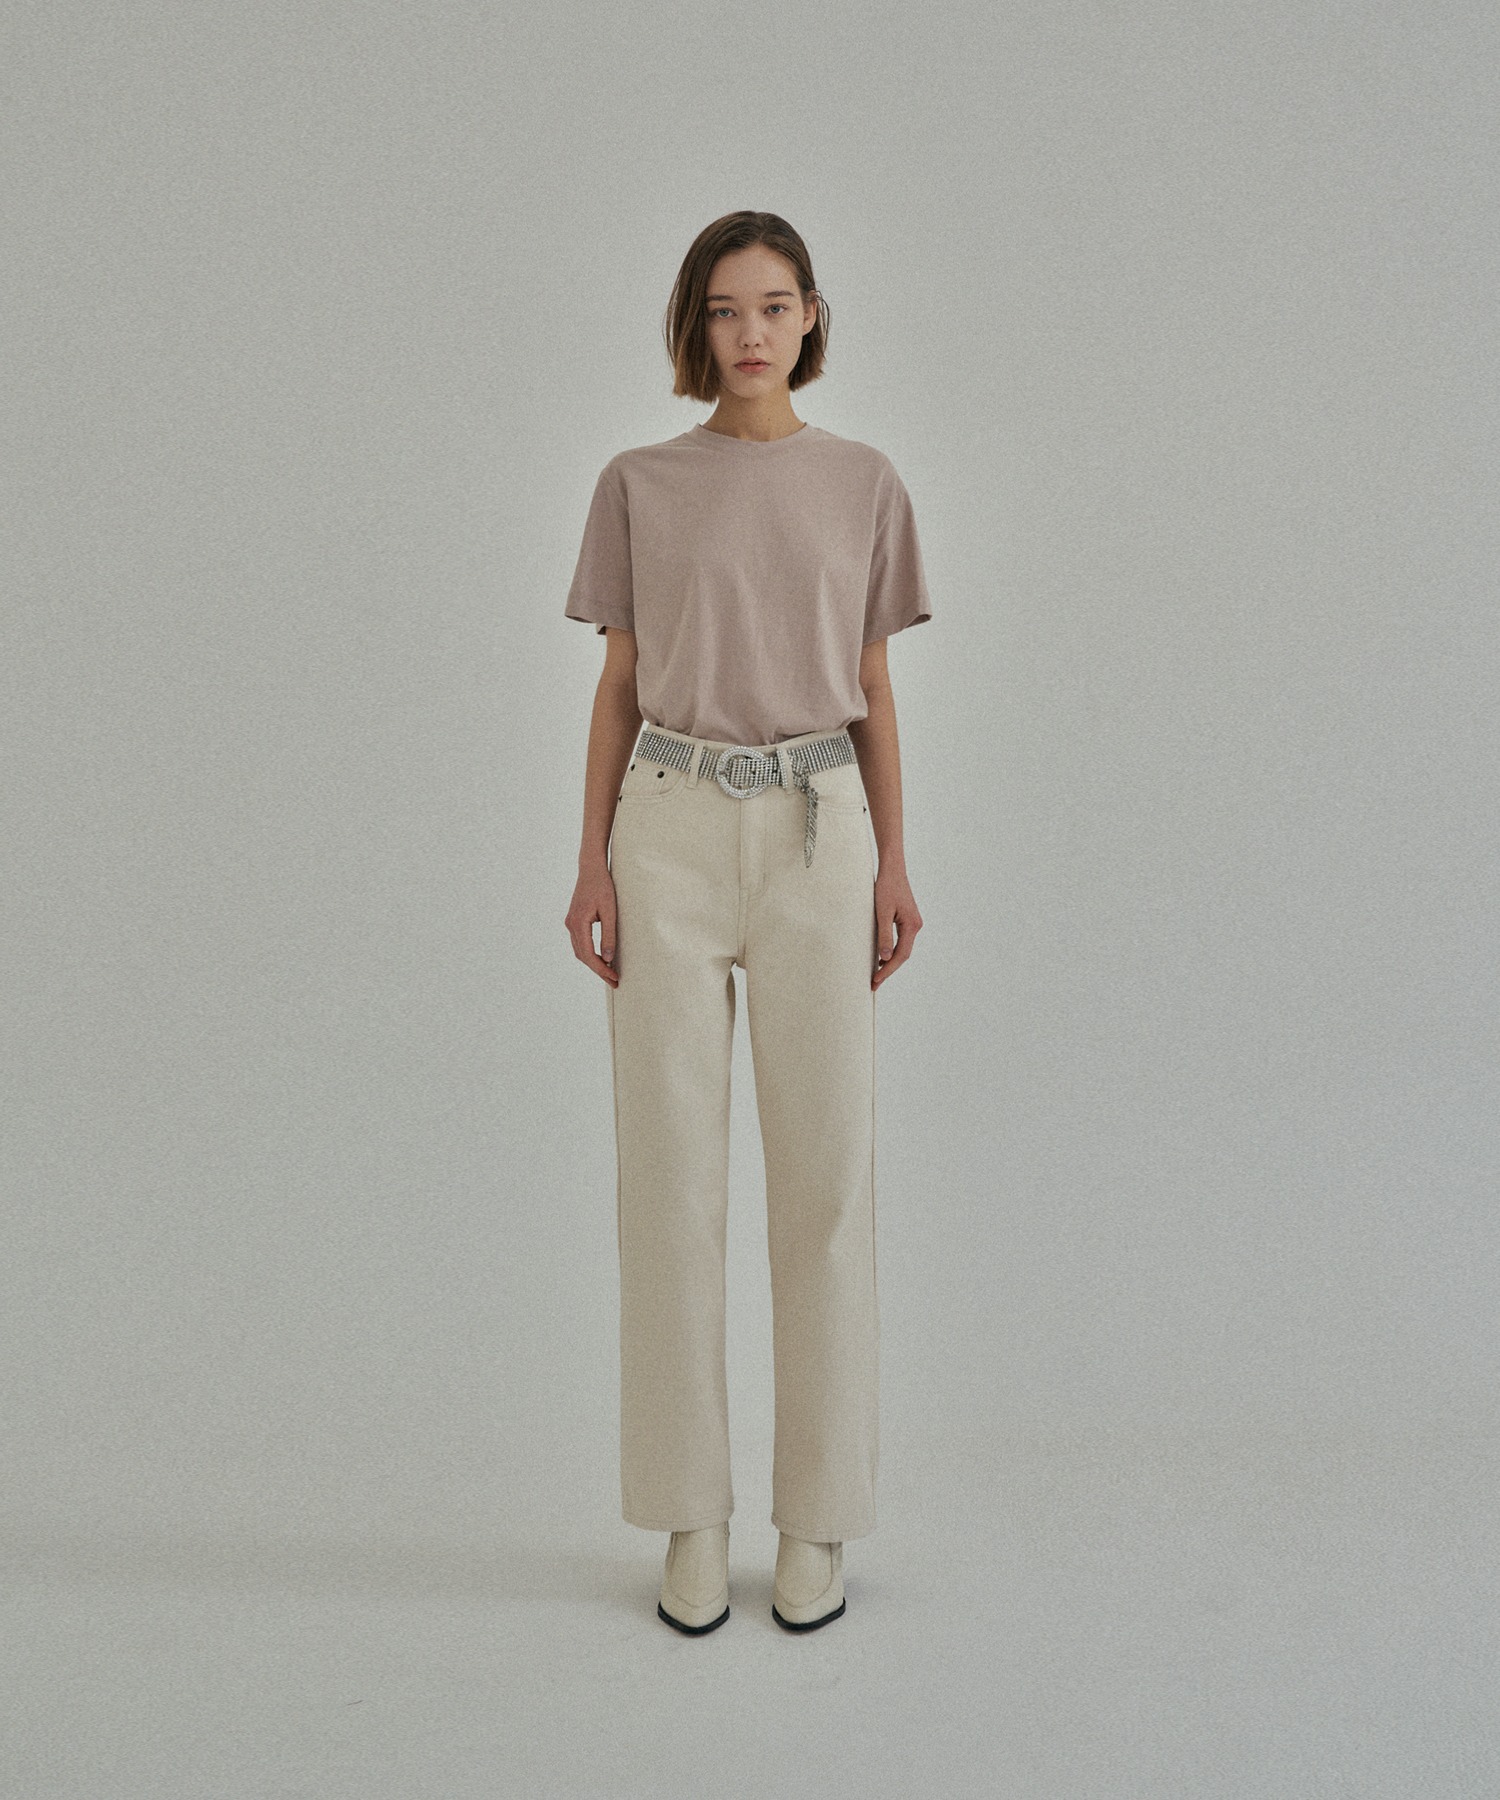 Essential Short Sleeve Layered Top (Pink Beige)